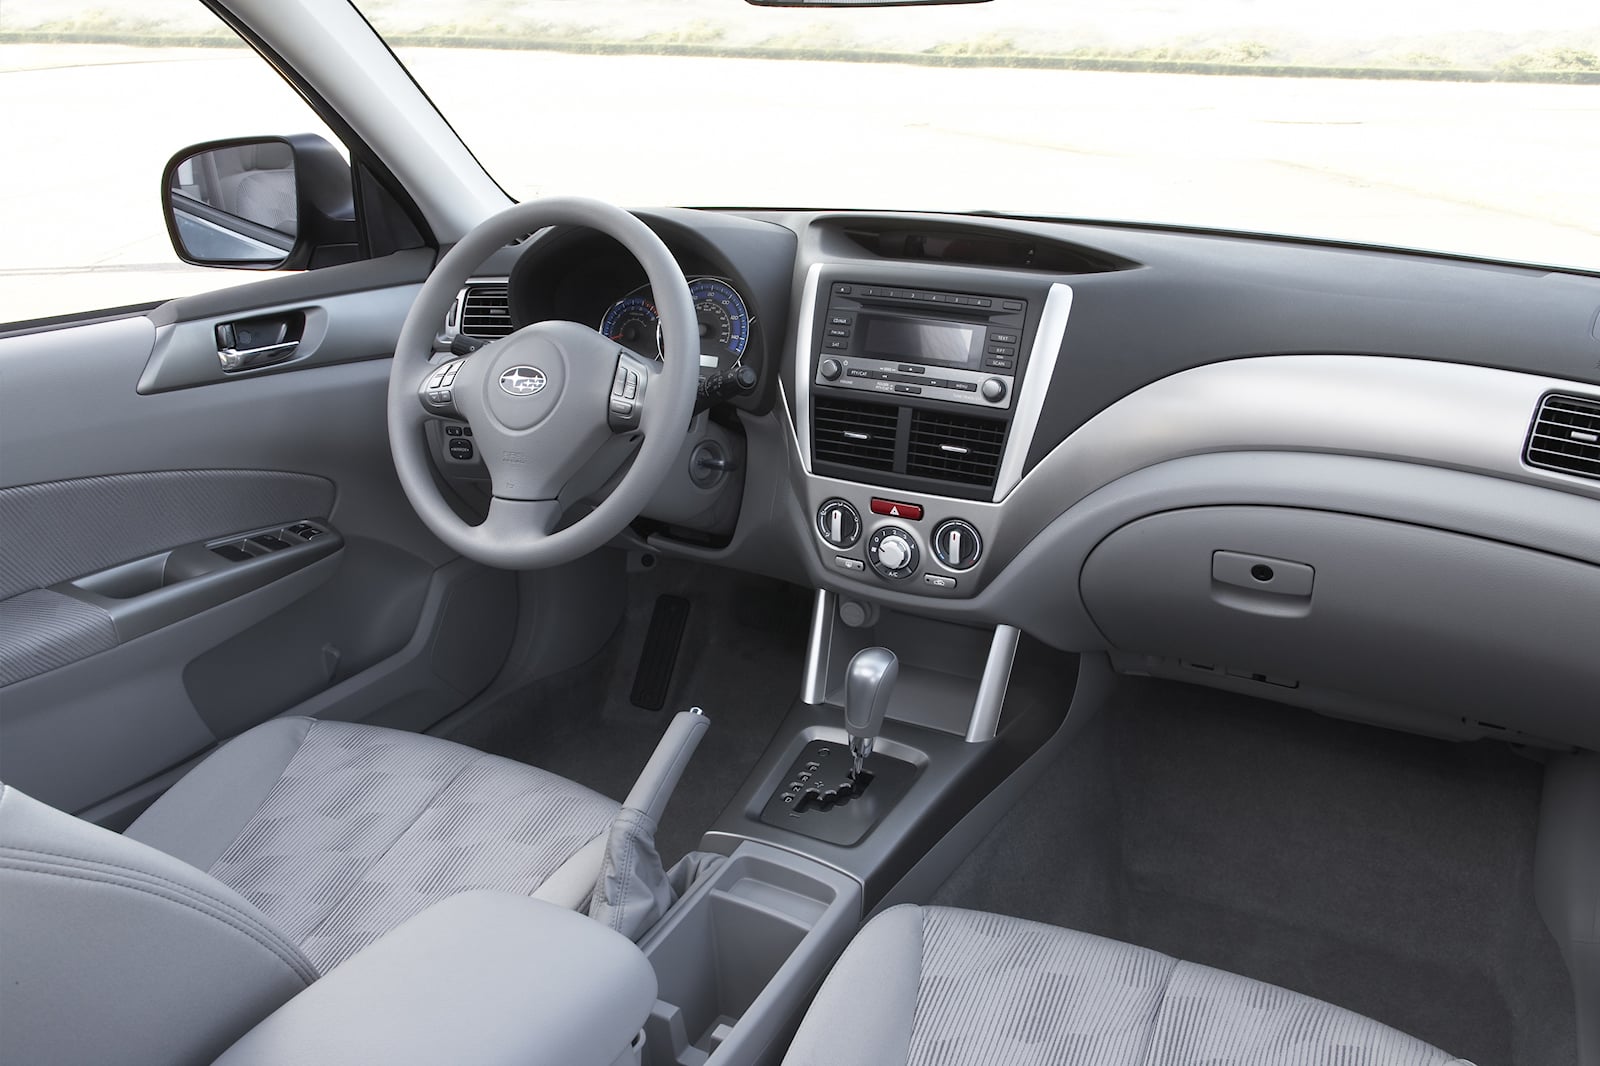 2010 Subaru Forester Dashboard